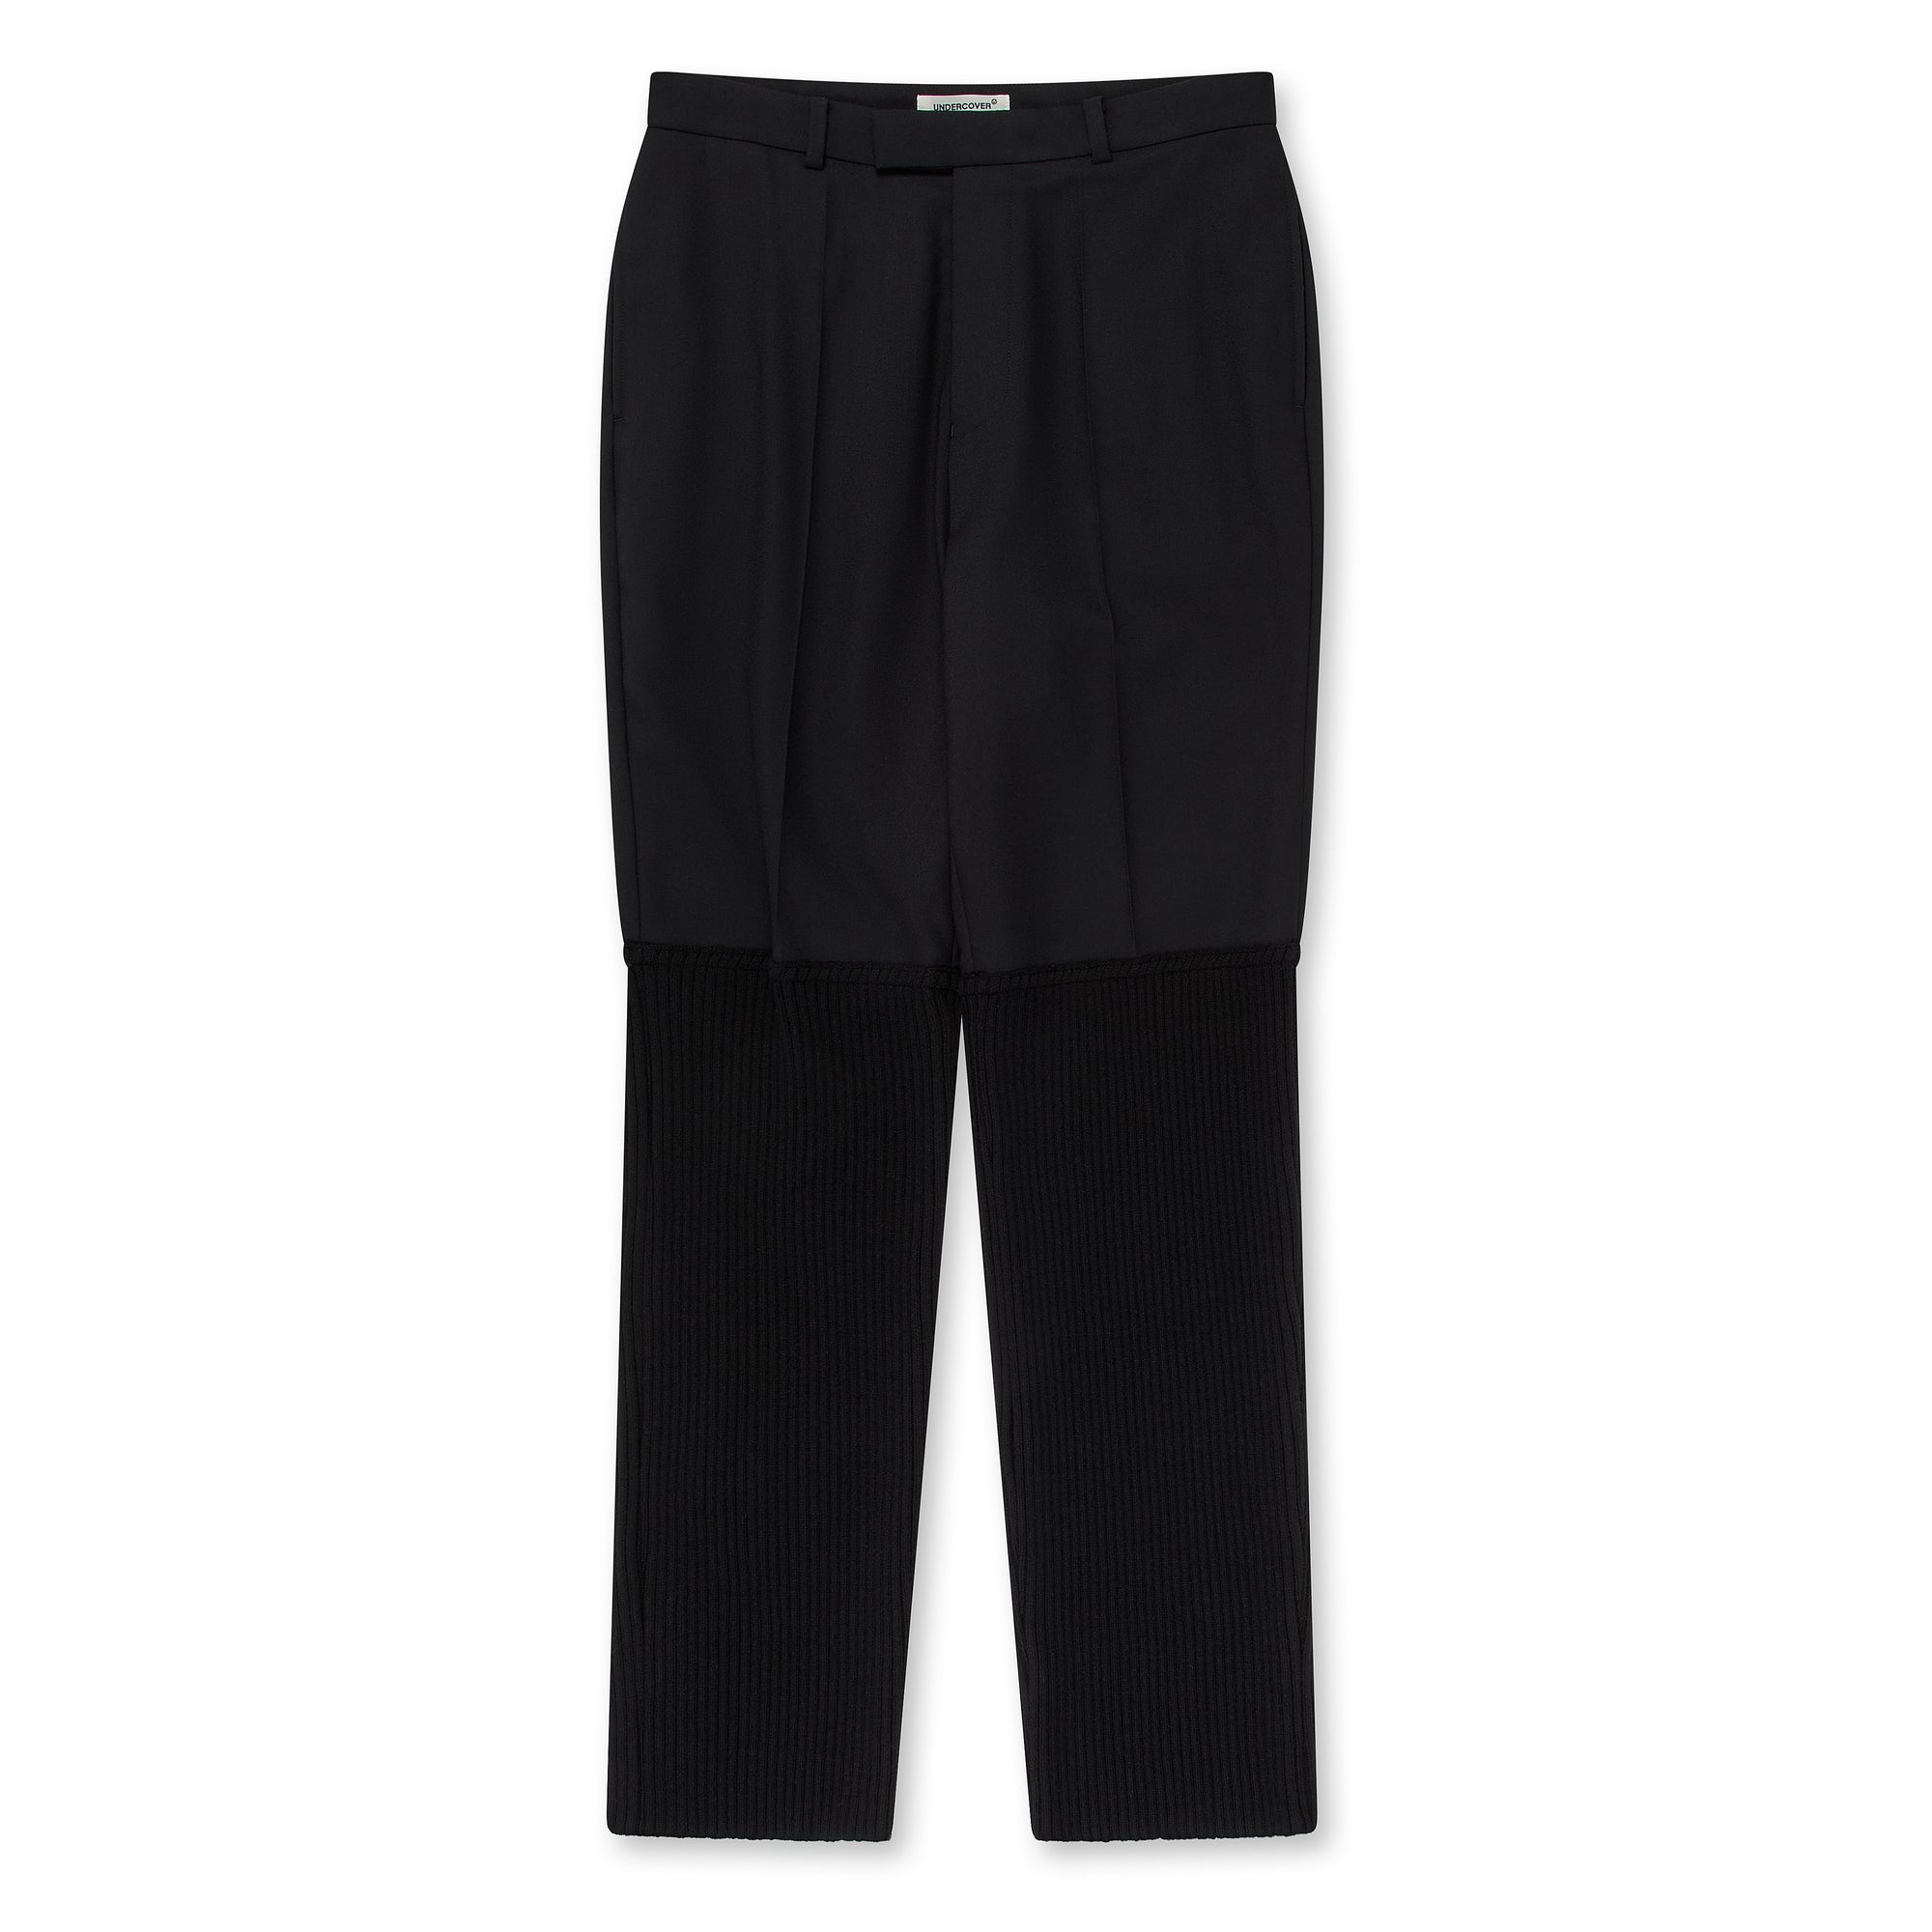 Undercover - Women’s Contrast Corduroy Trousers - (Black) view 1